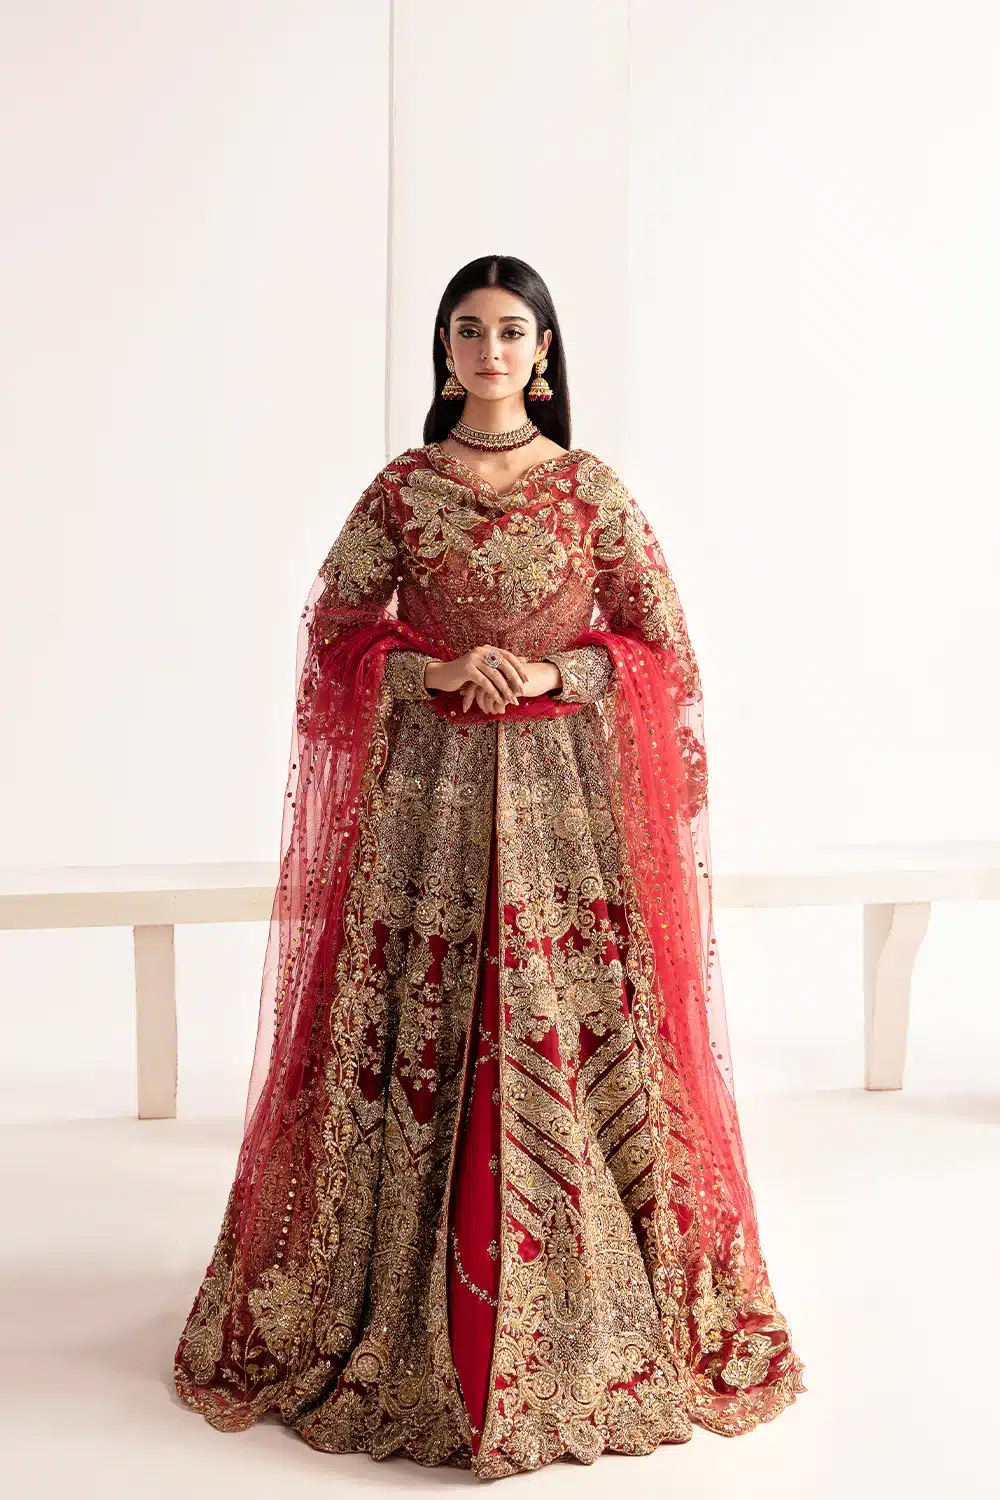 Latest Saira Rizwan Bridal Dresses Golden and red color